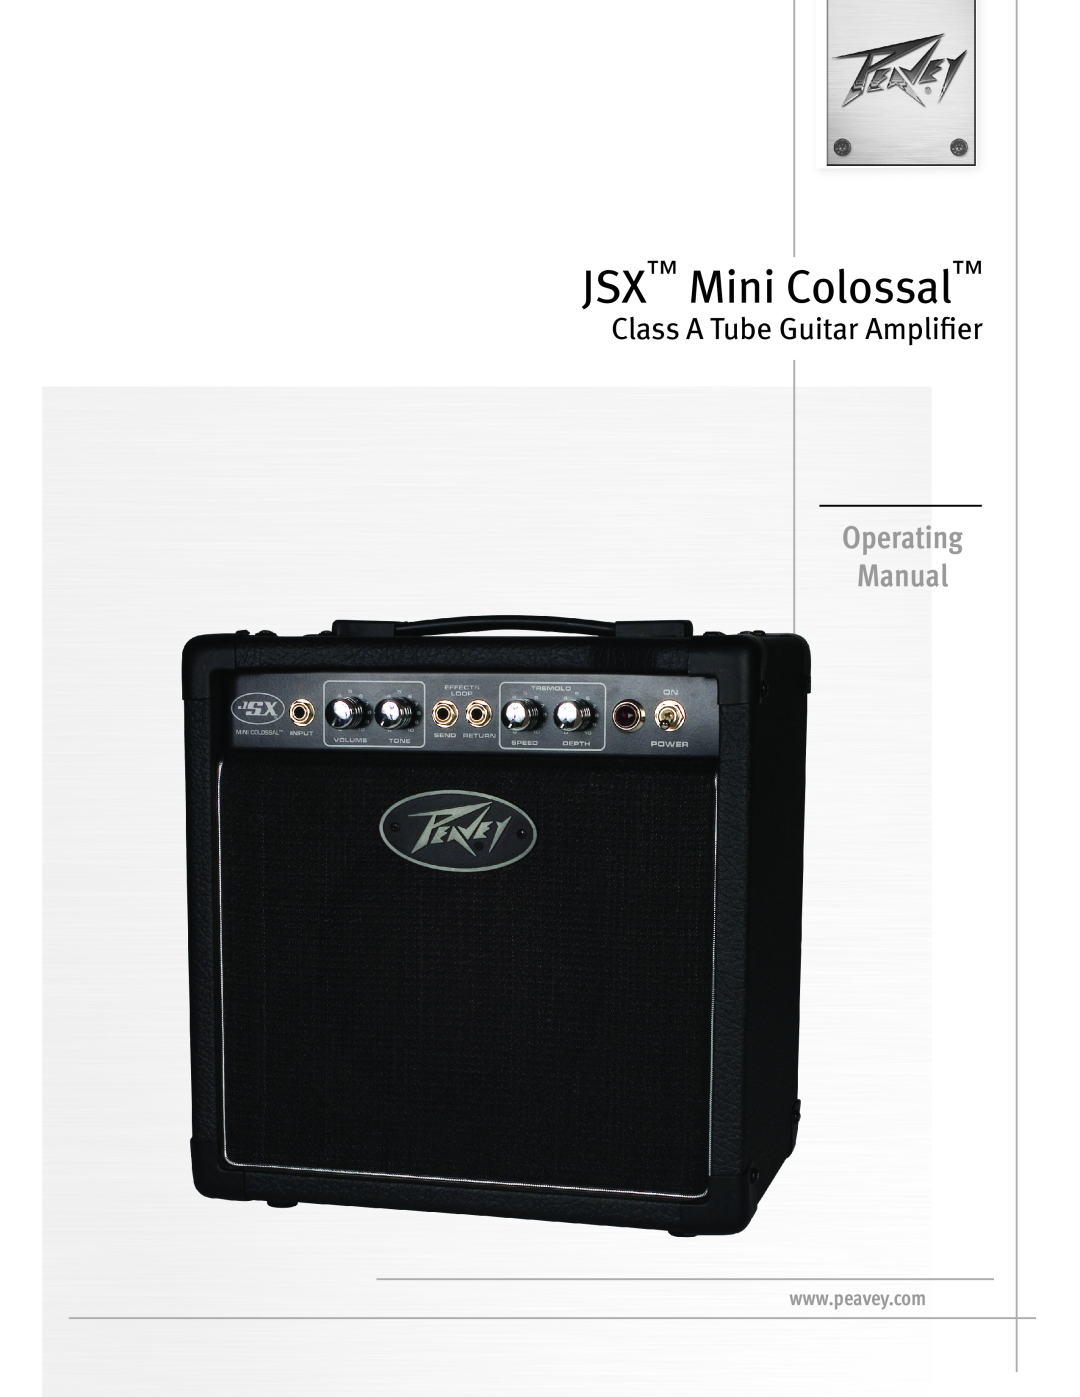 Peavey JSX Mini Colossal manual Operating Manual, Class A Tube Guitar Amplifier 